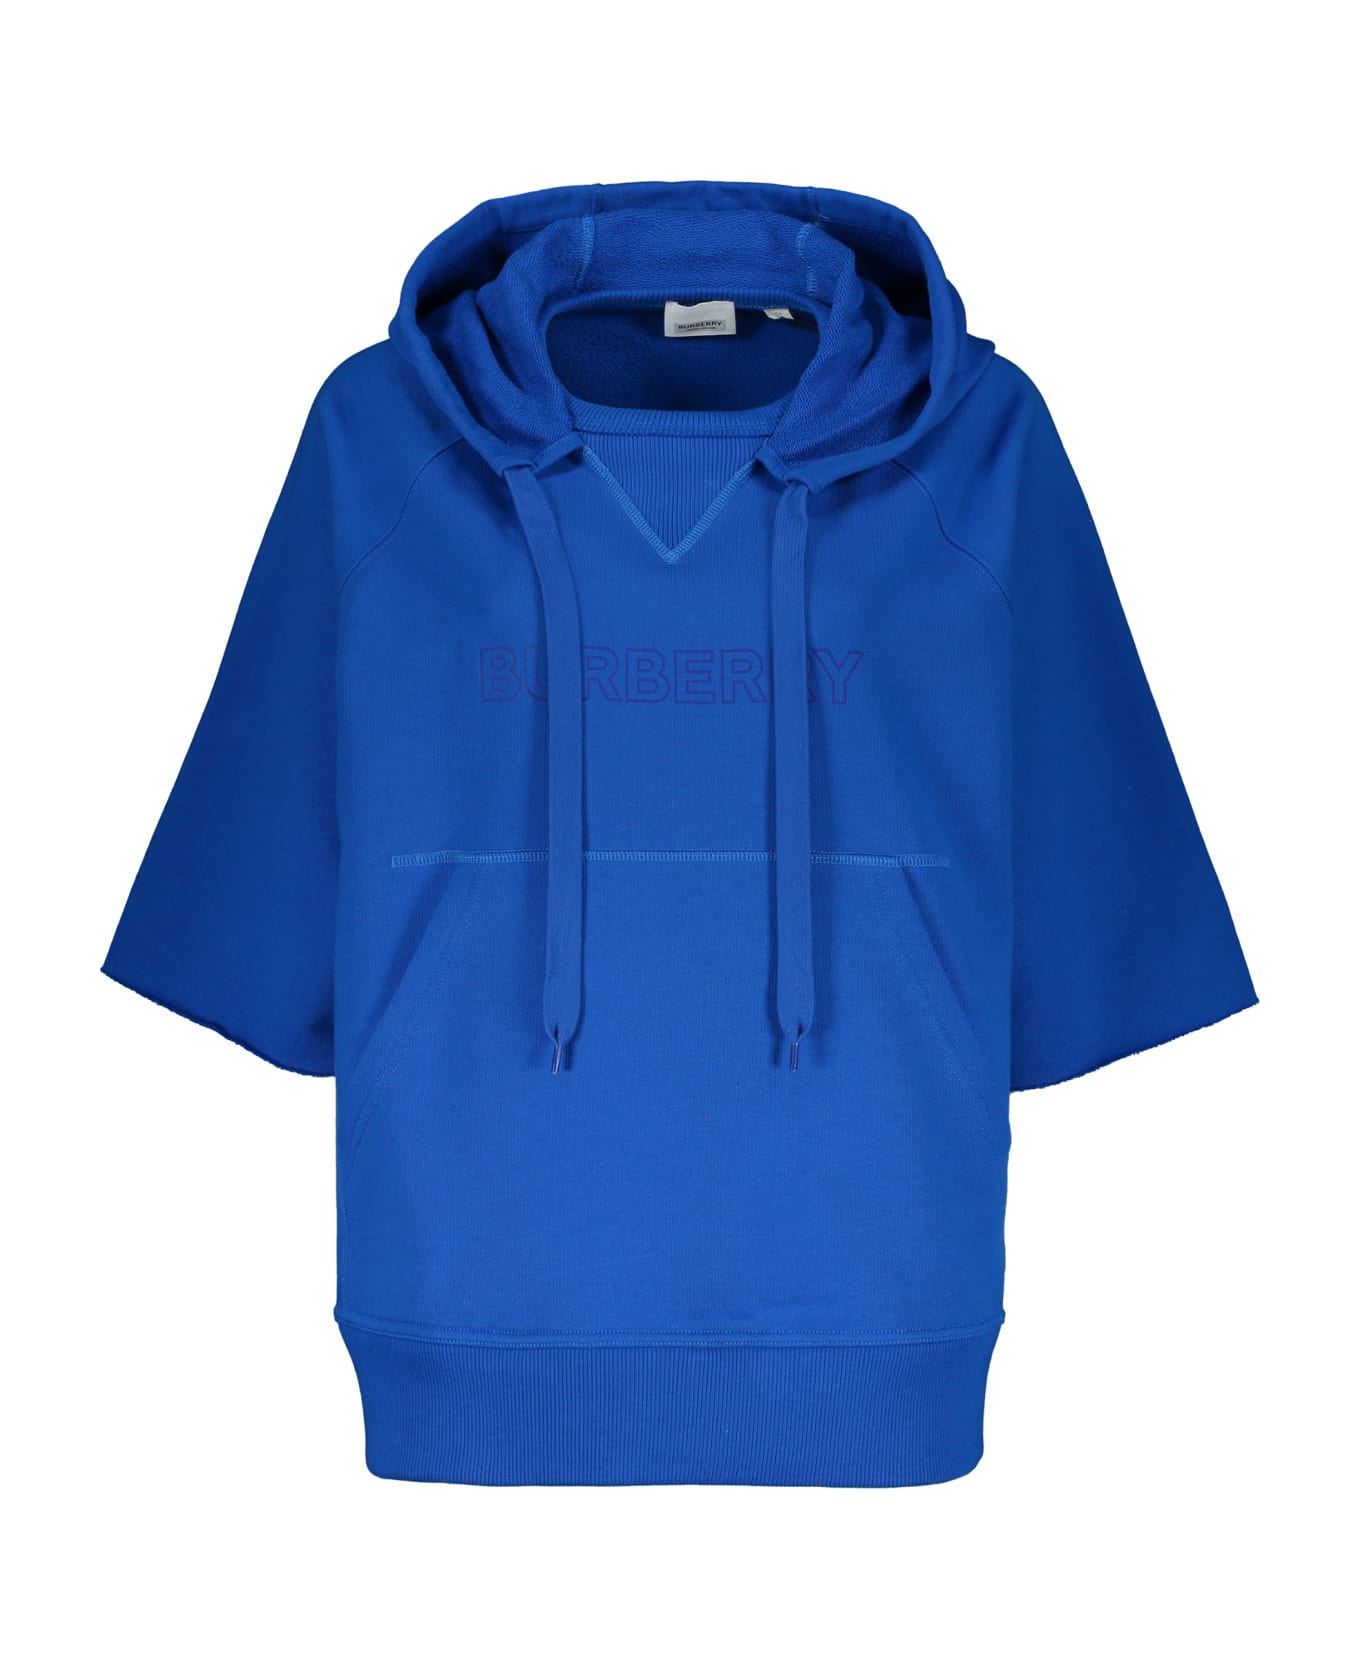 Burberry Short Sleeved Sweatshirt - blue フリース